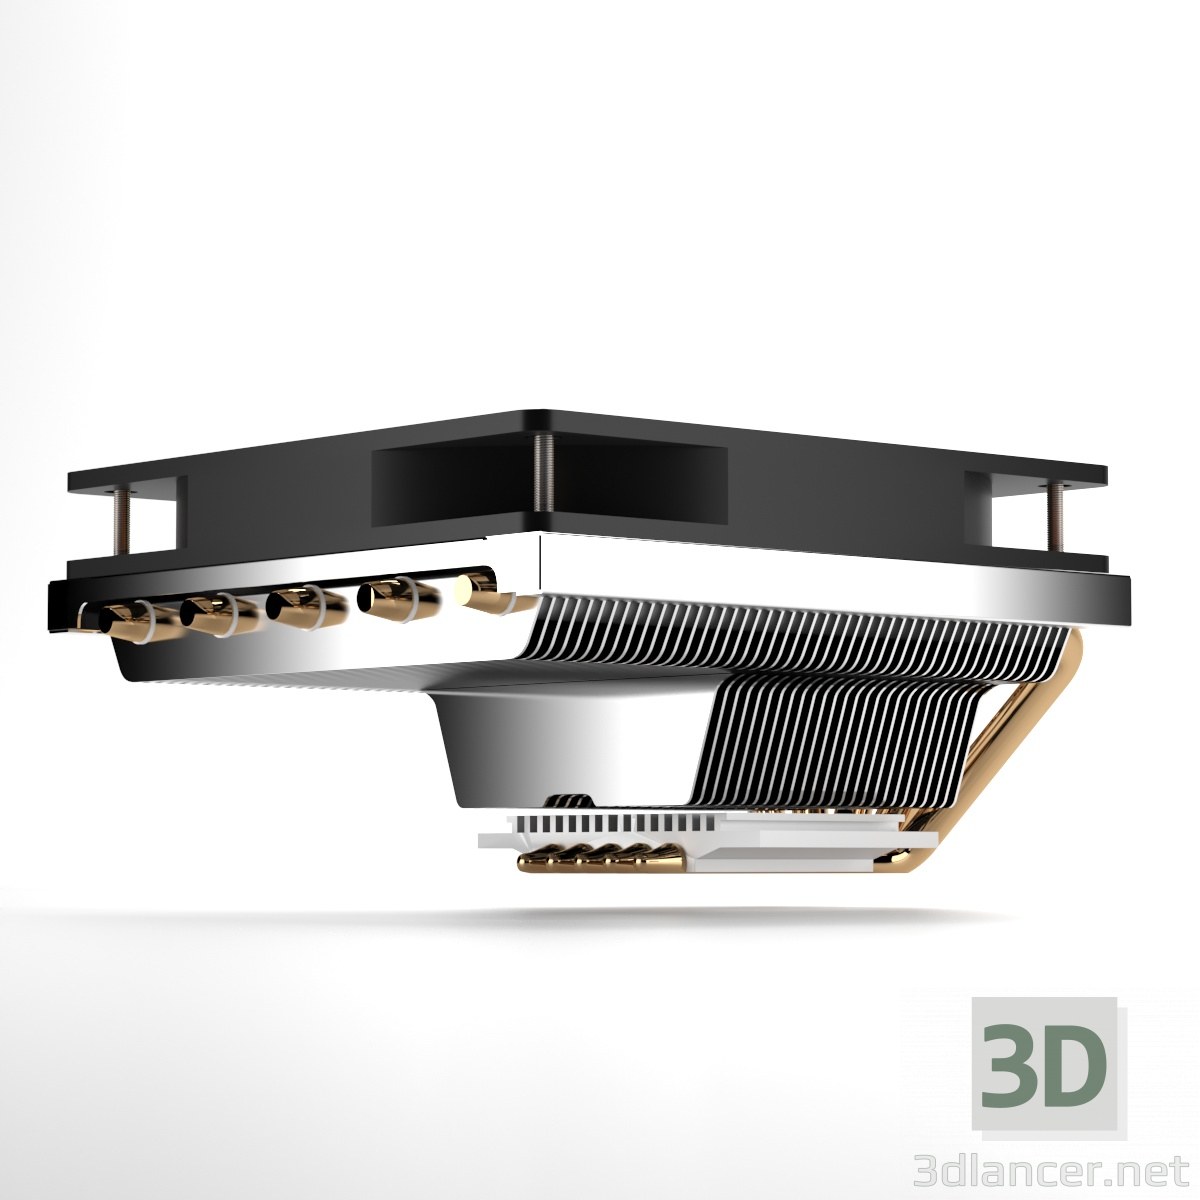 3d CoolerMaster GeminII M5 LED model buy - render